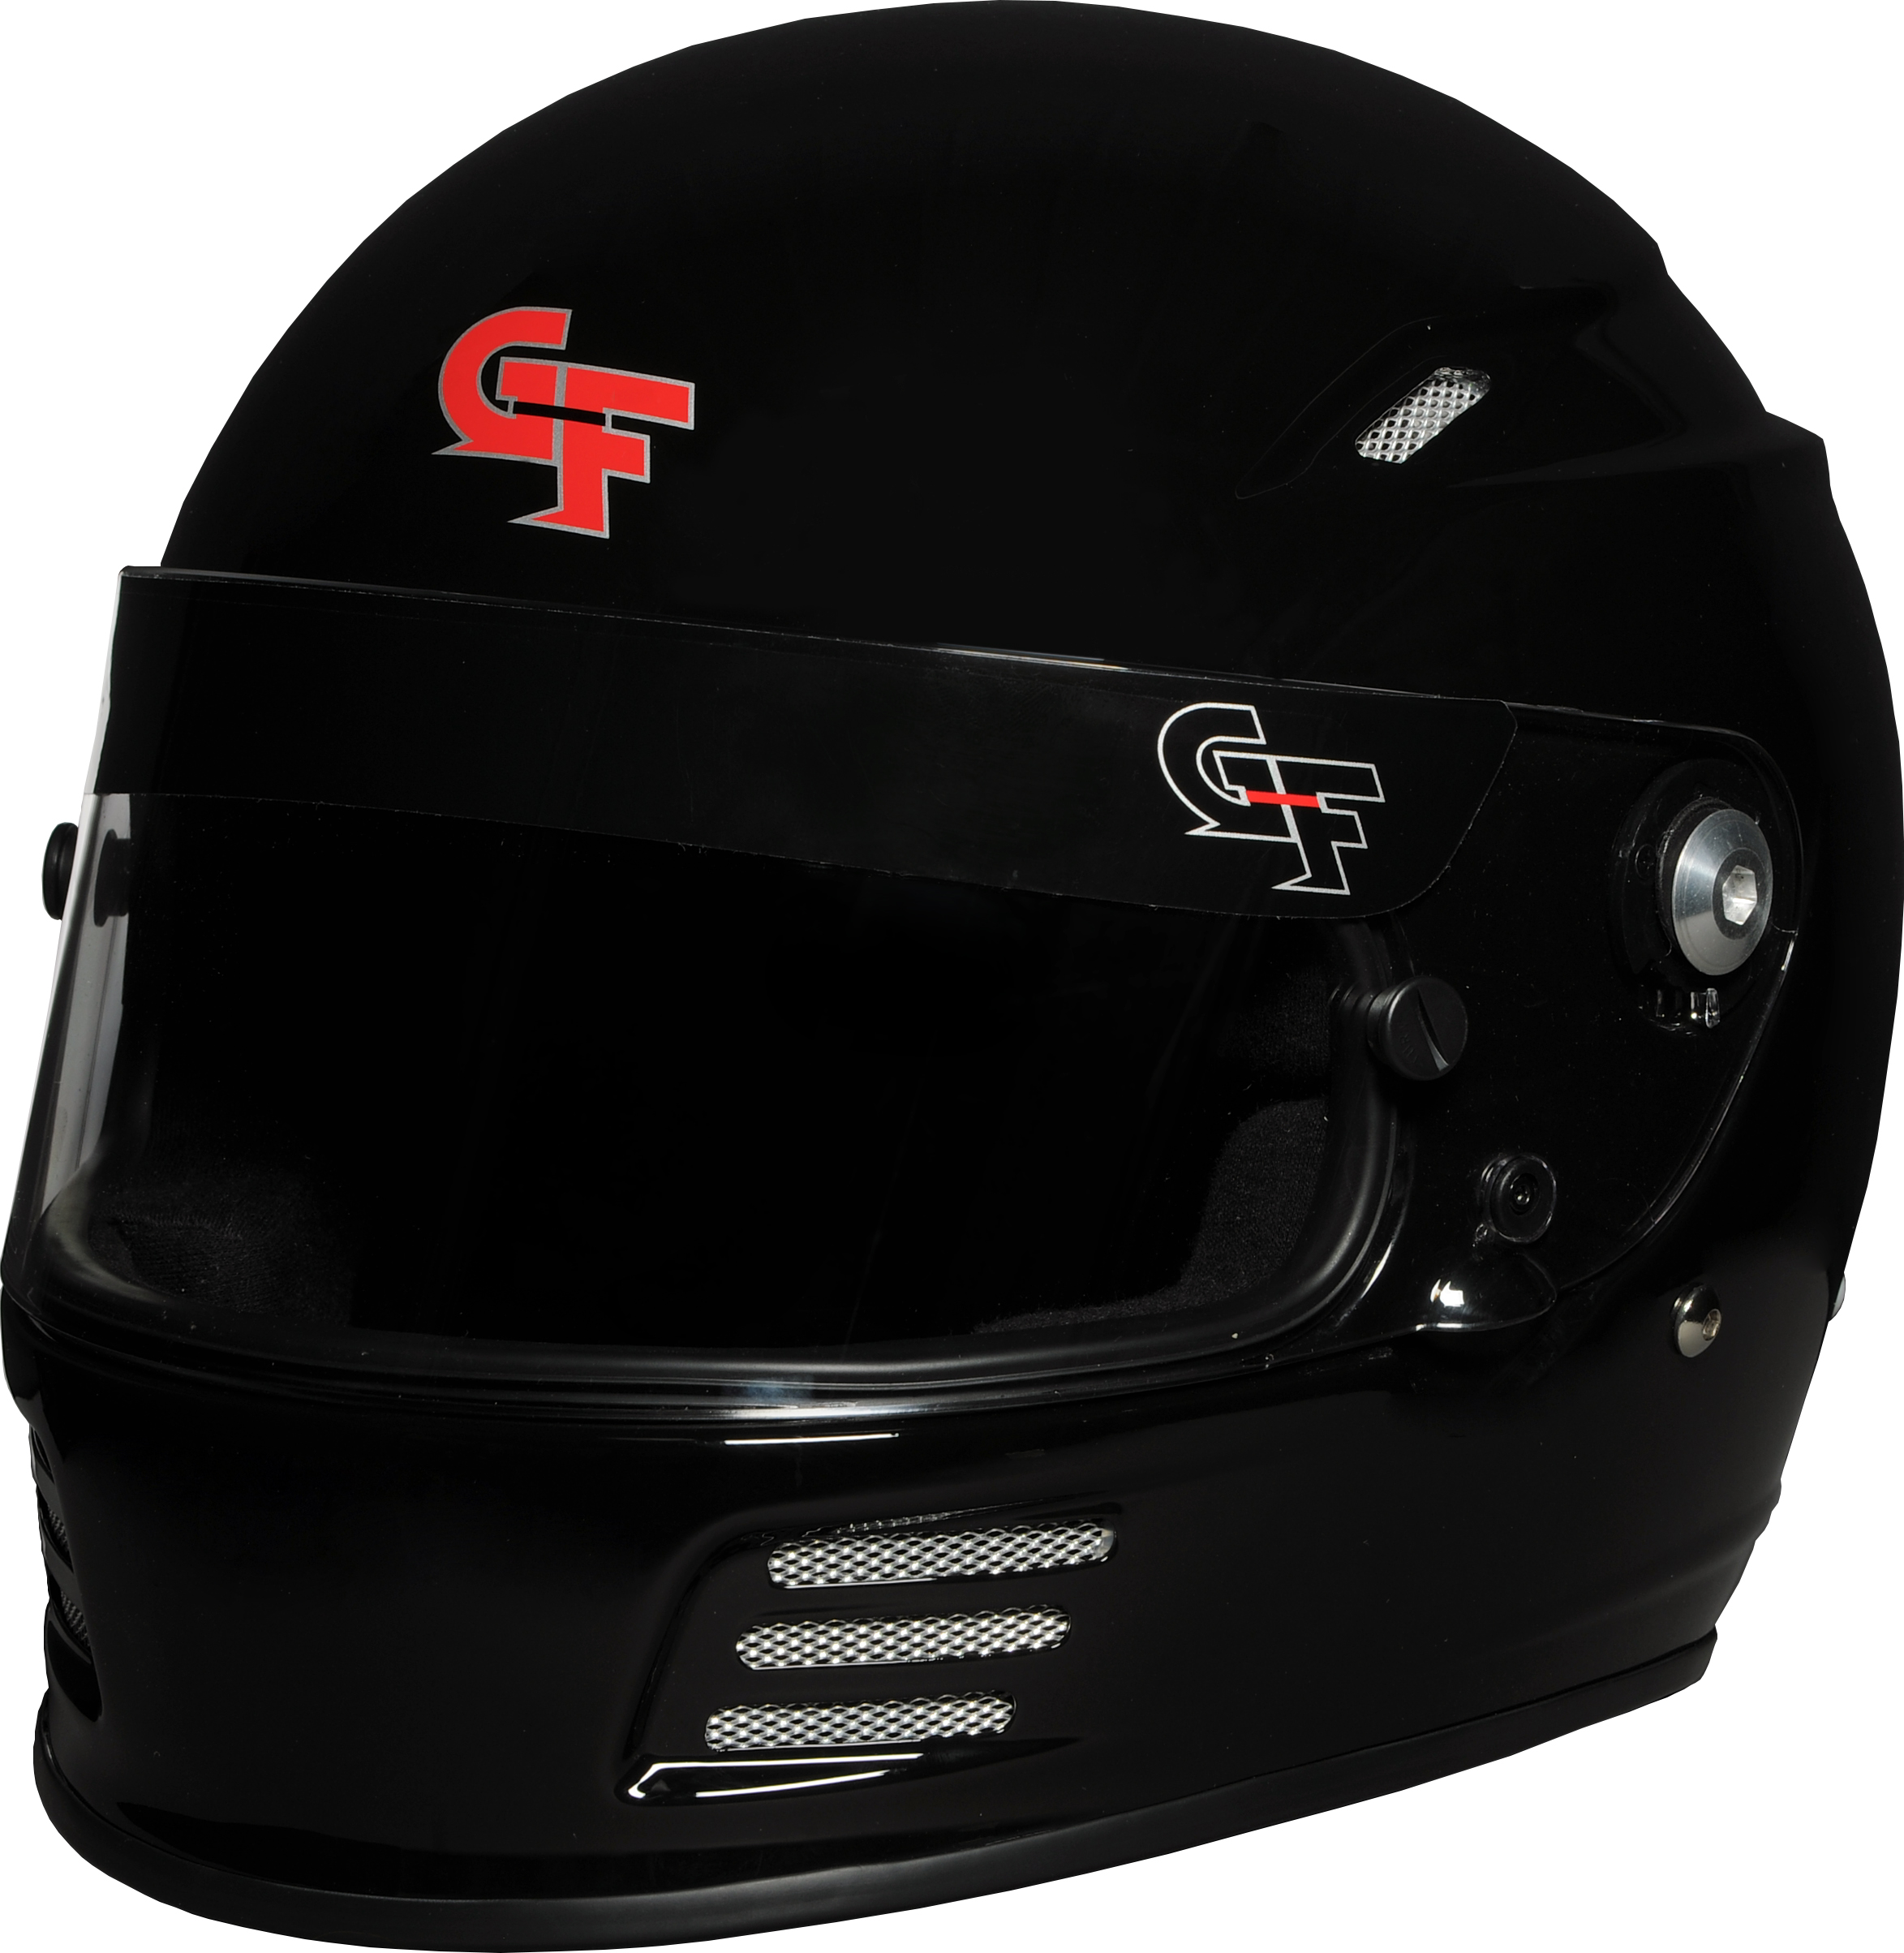 G-Force Racing Gear Helmet, EX9 FULL FACE LARGE BLACK SA15